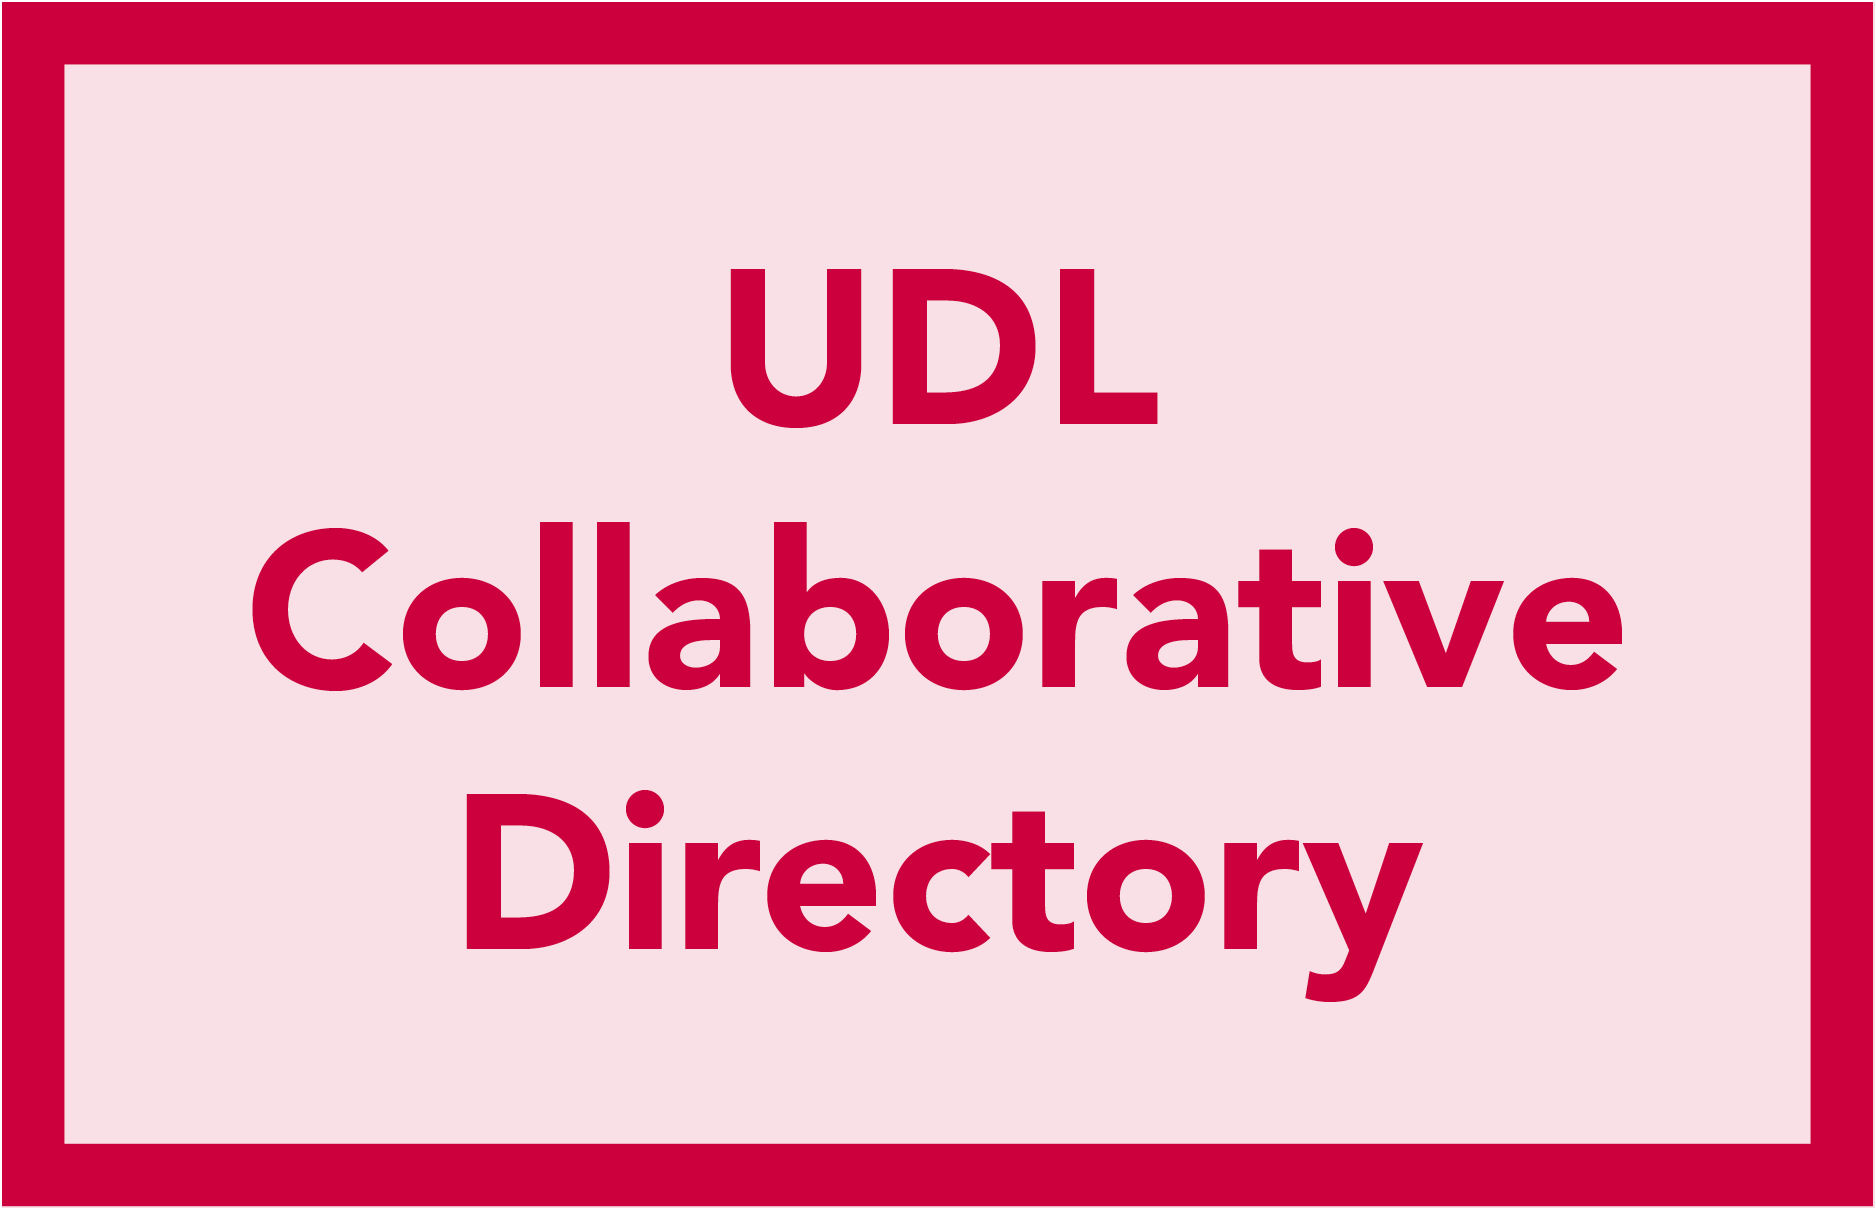 UDL Collaborative Directory